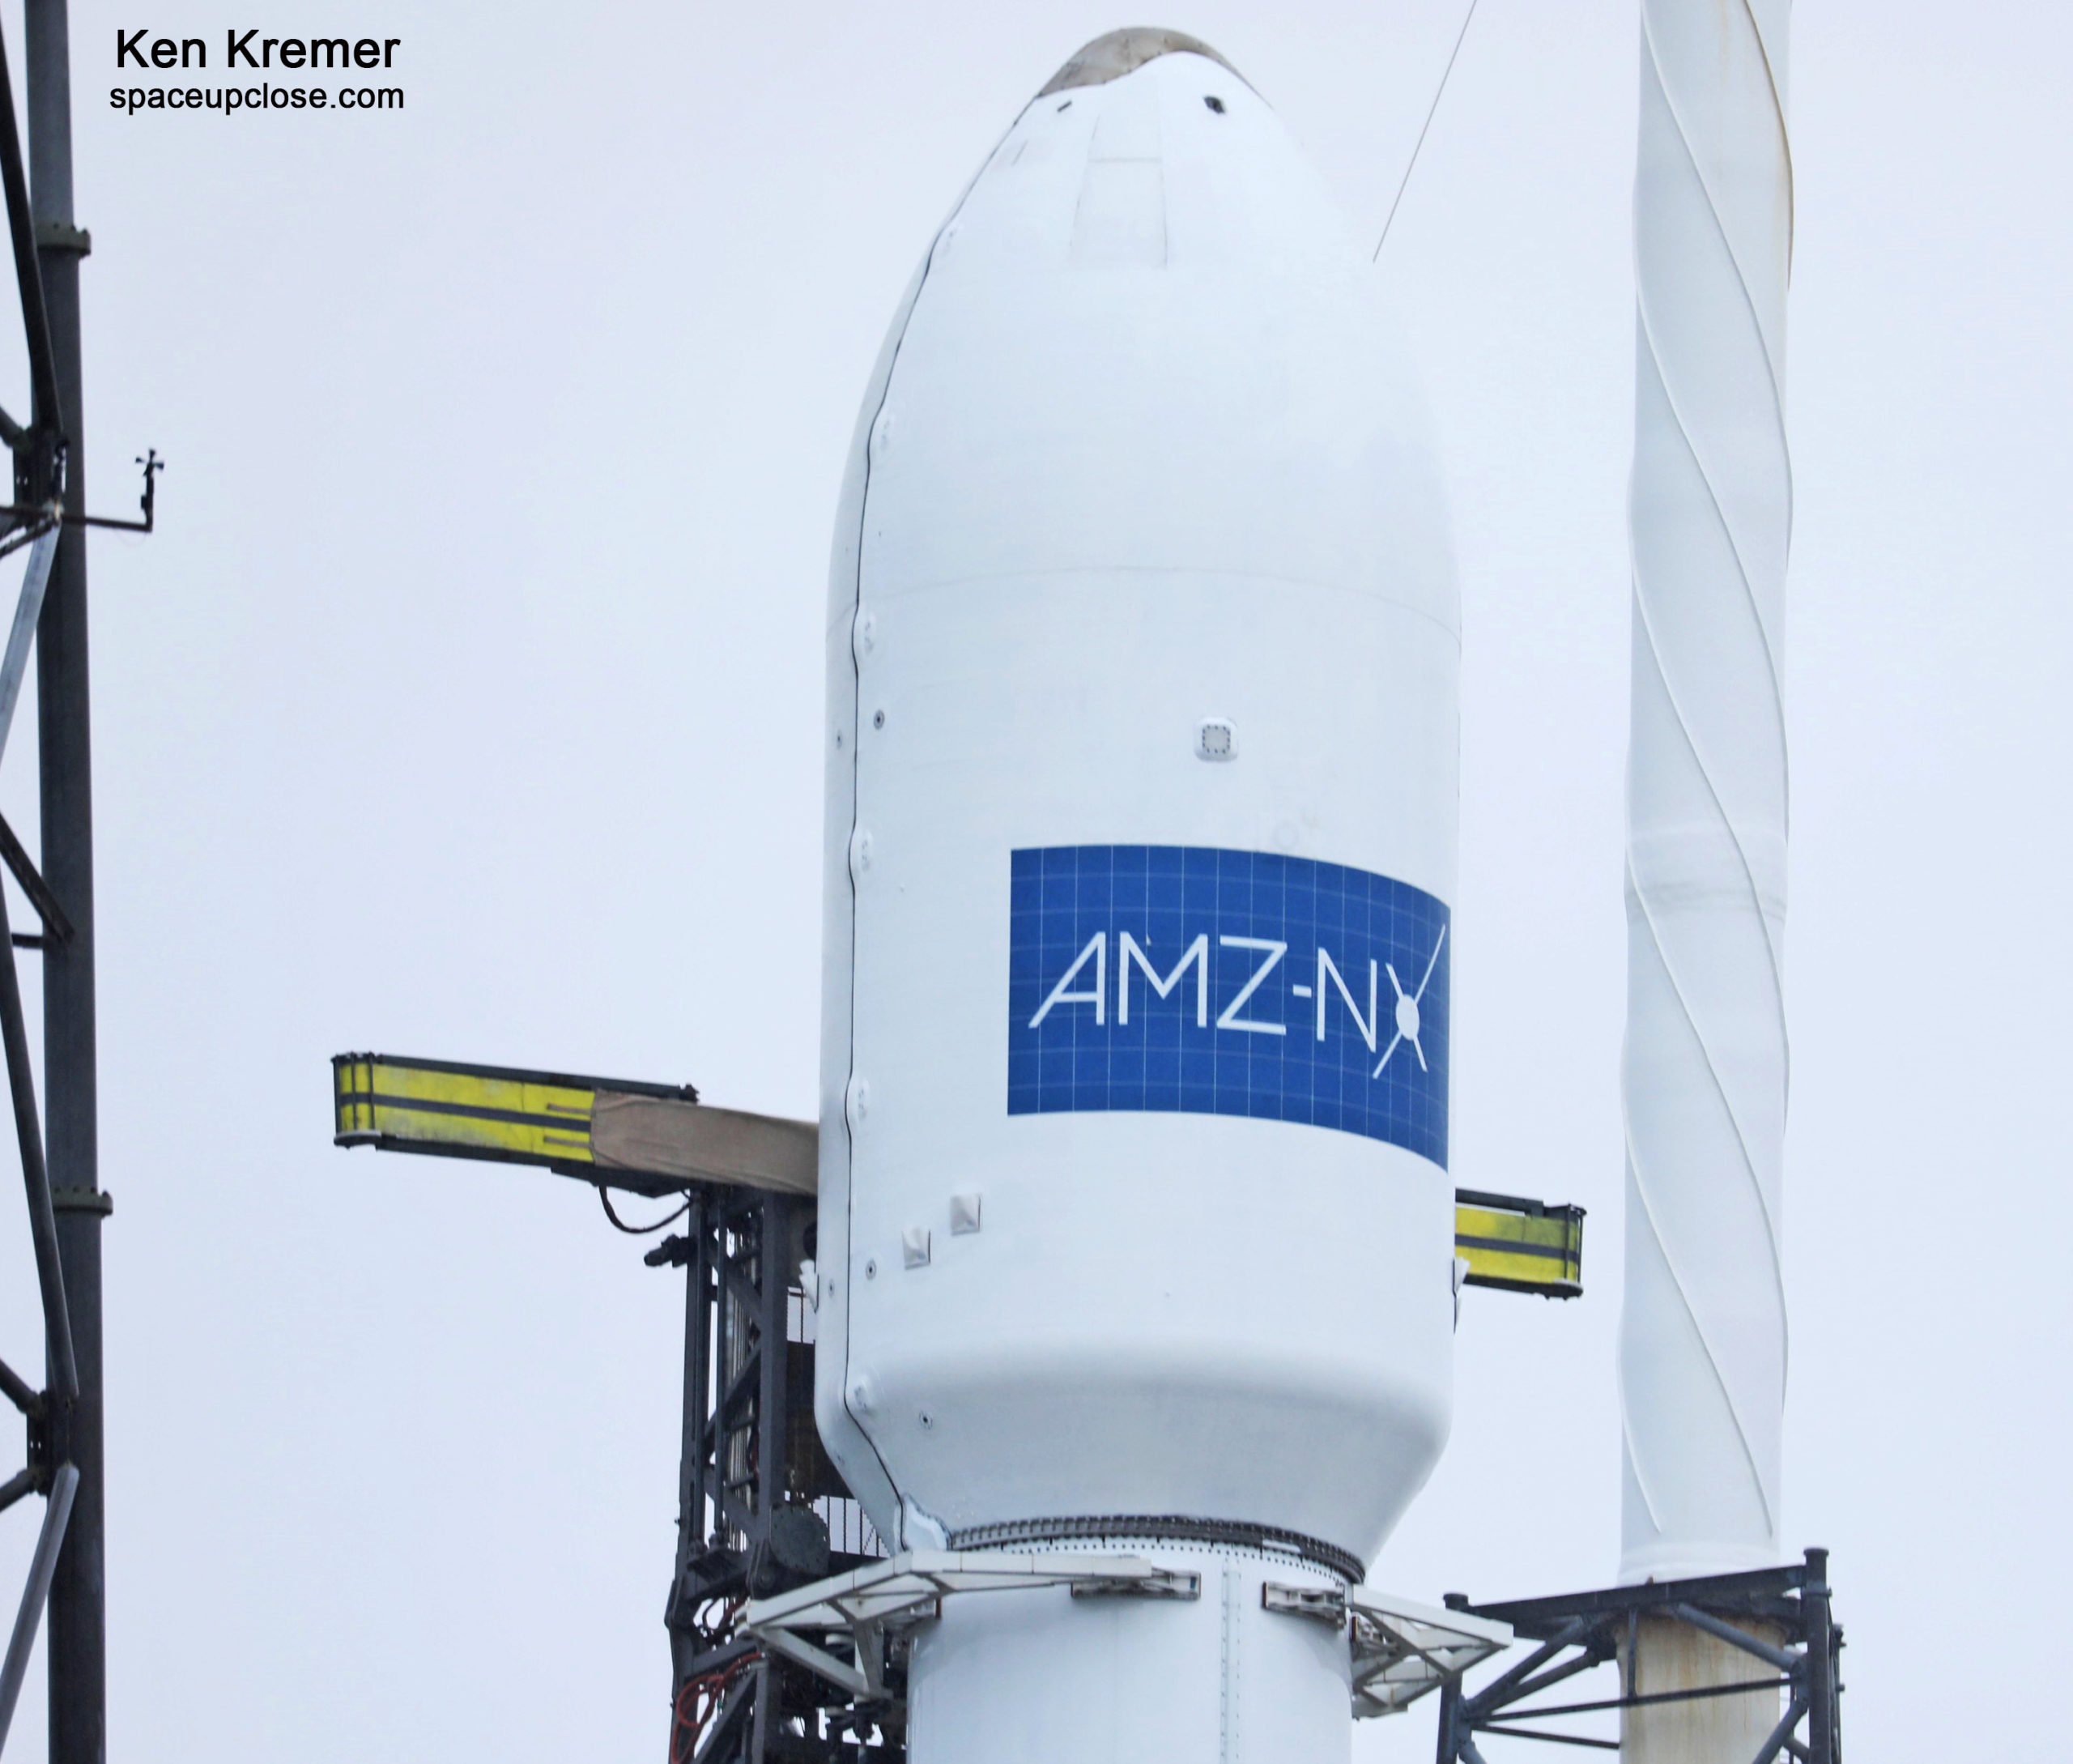 UpClose with Spanish Amazonas Nexus Internet Satellite Poised for SpaceX Falcon 9 Liftoff: Photos